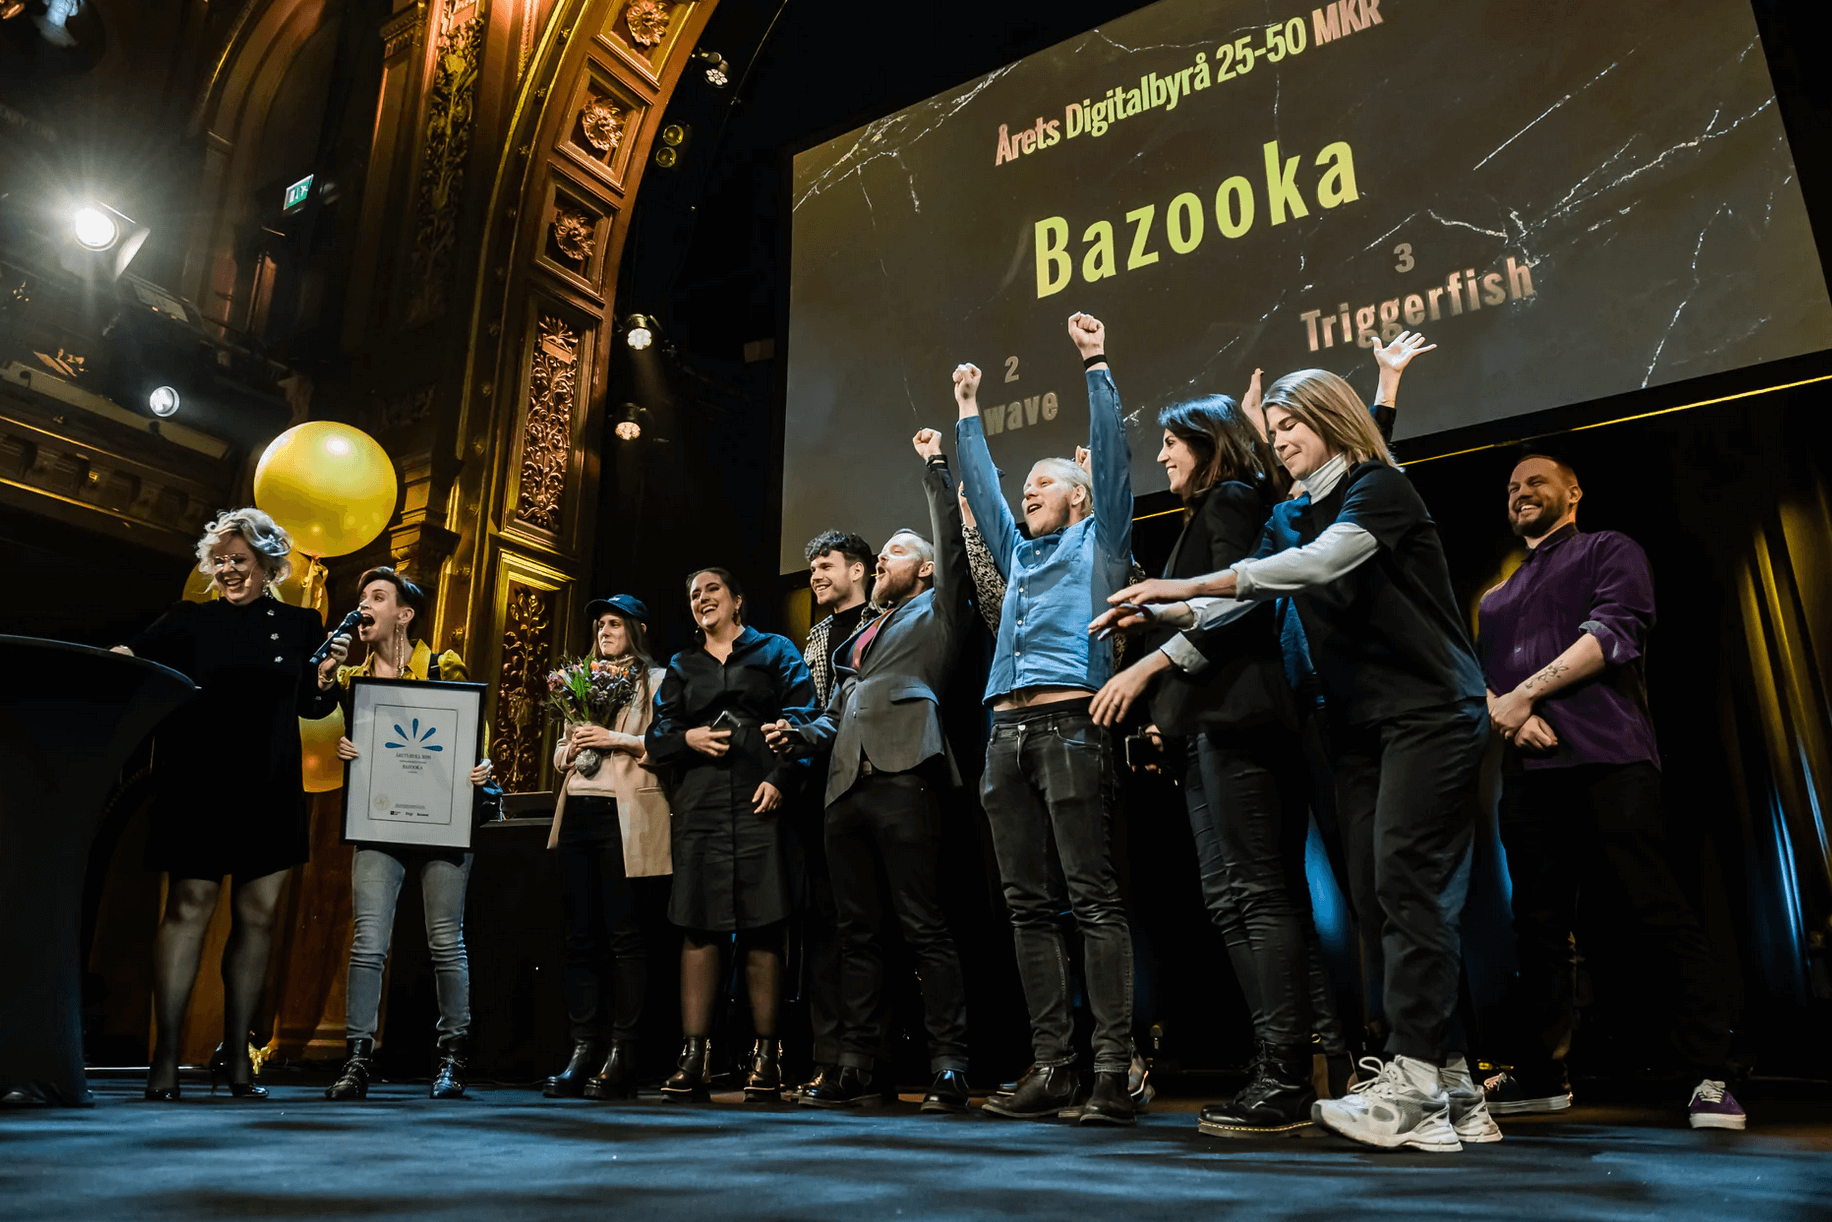 Bazooka vinner årets digitala byrå